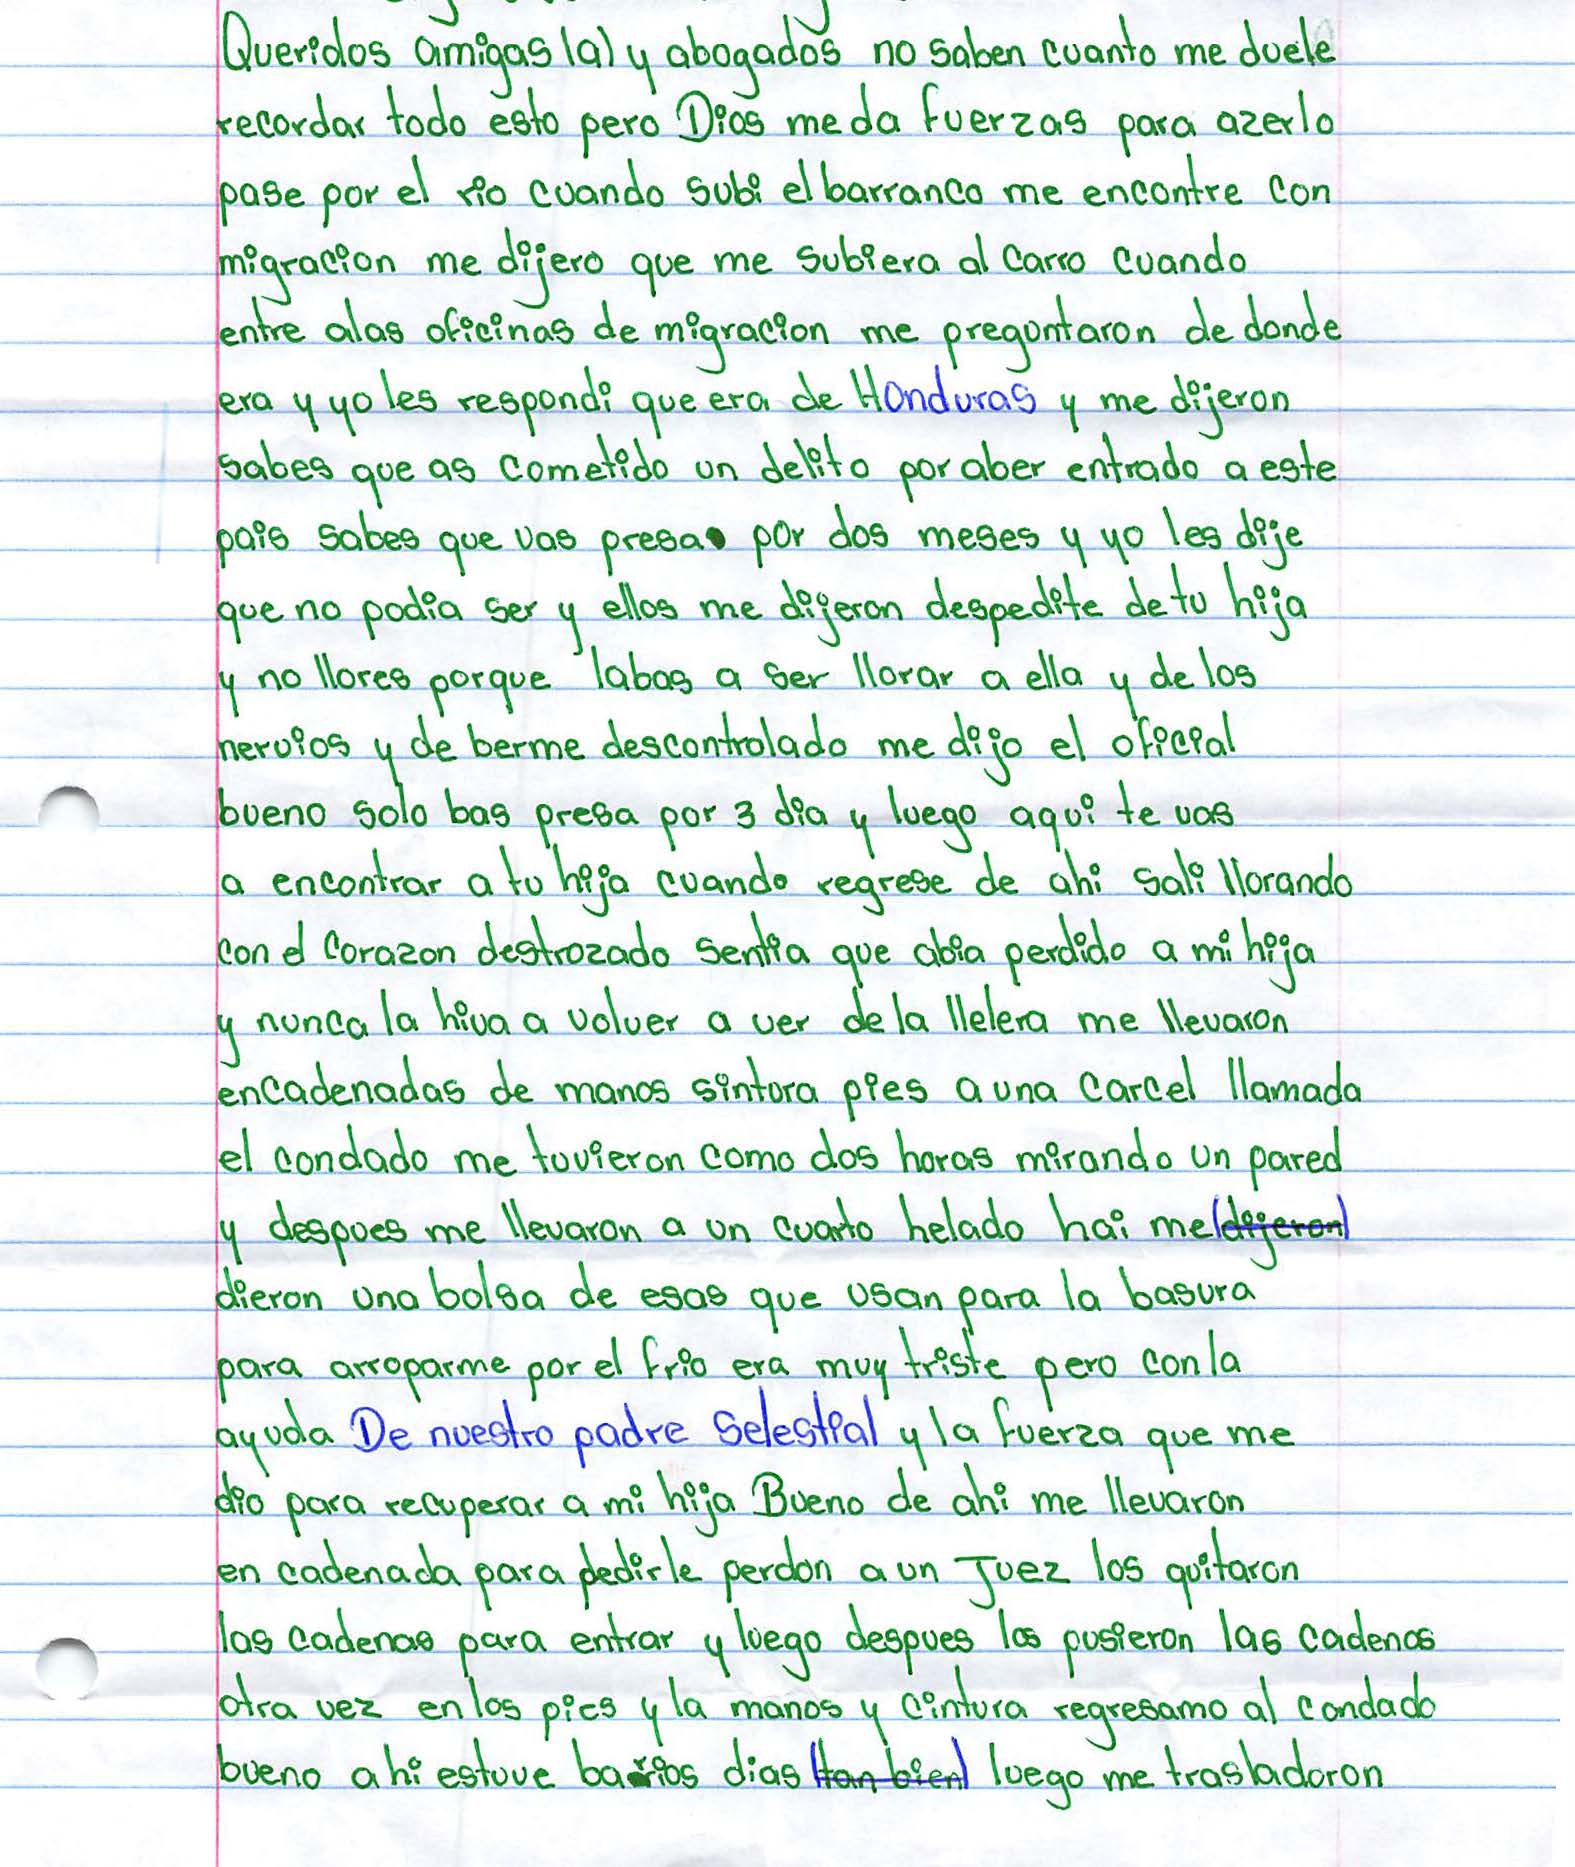 Carla's Handwritten Letter Part 1